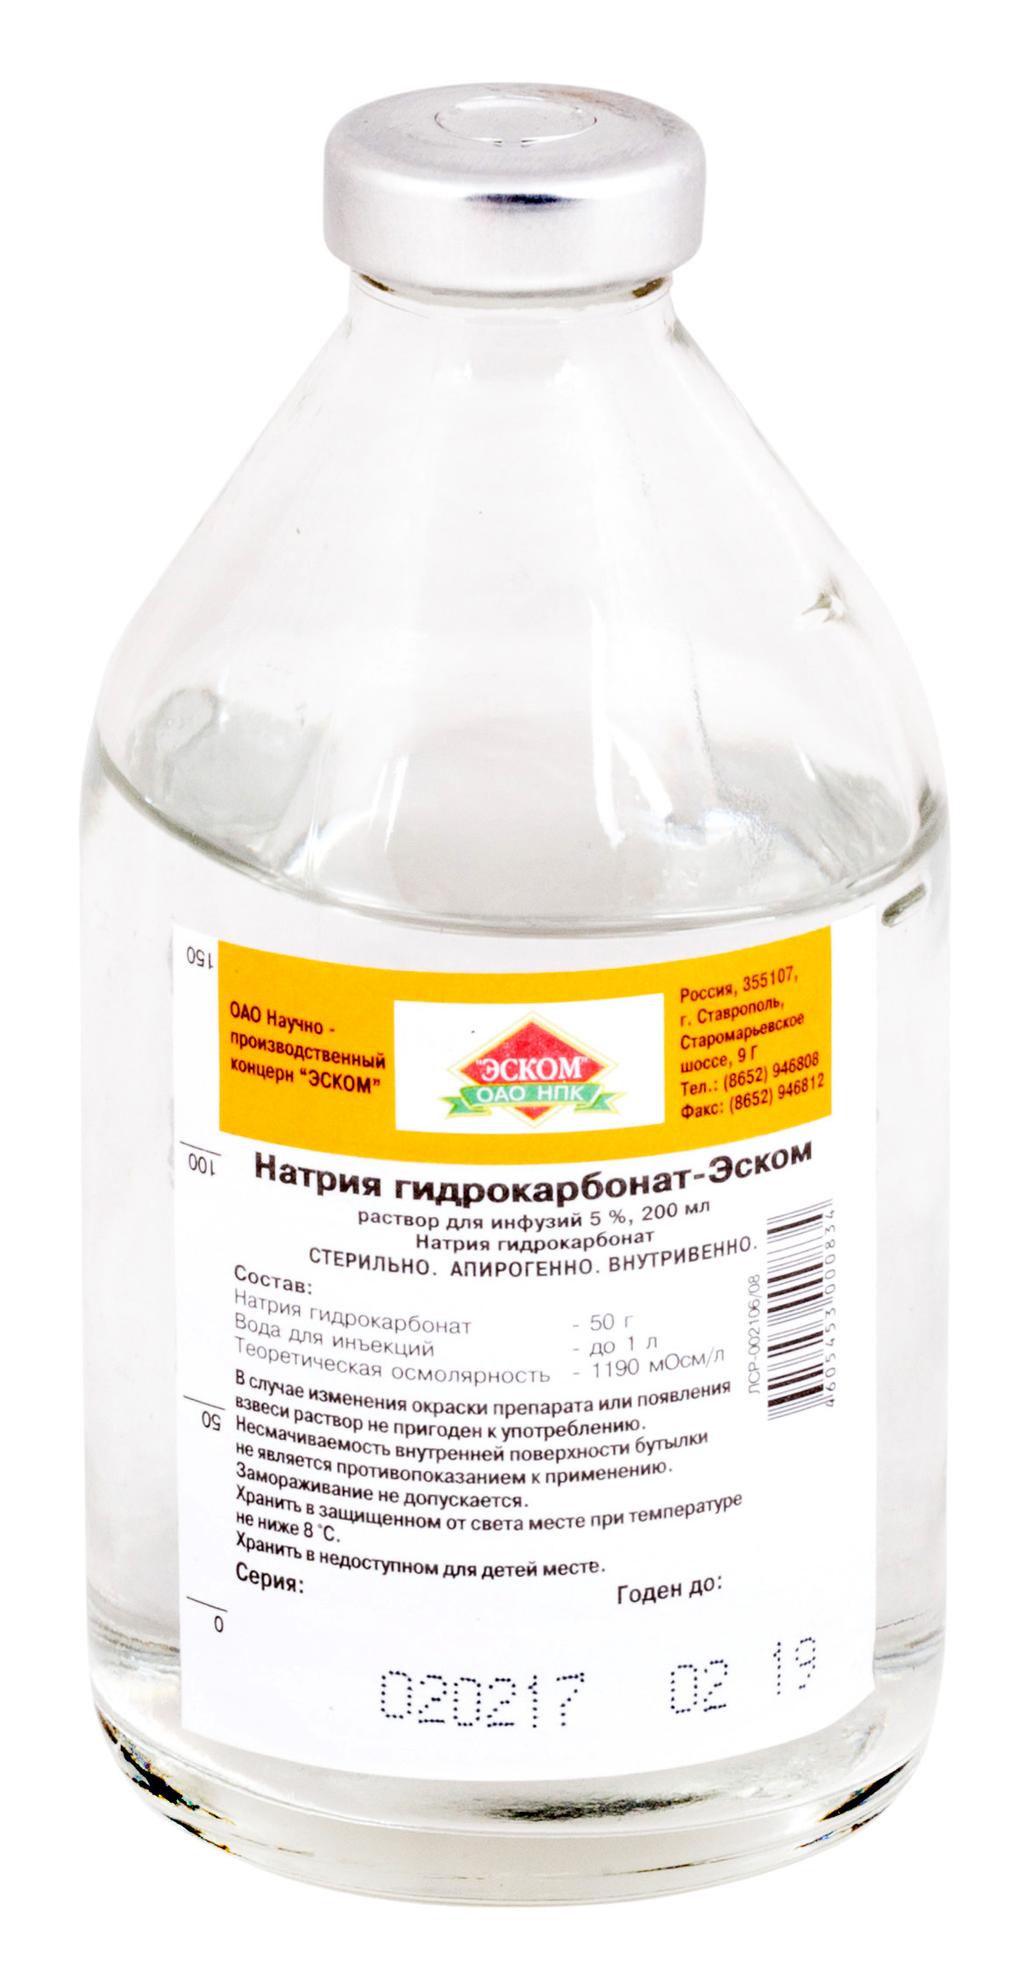 Натрия гидрокарбонат-Эском раствор 5% фл 200 мл